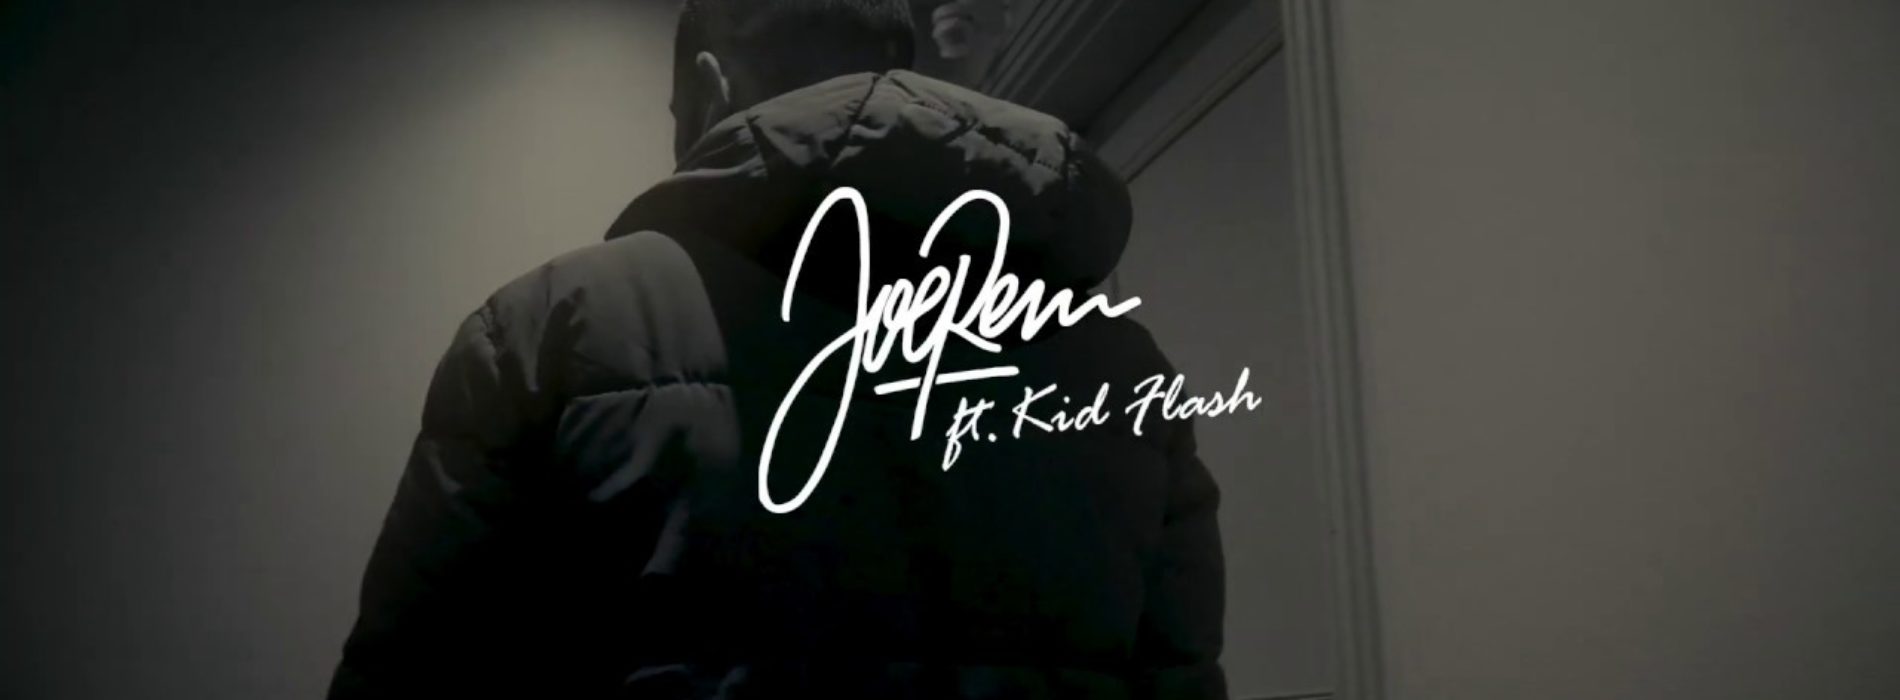 Joe Rem – All Night ft. Kid Flash (Official lyrics Video) – Mars 2020